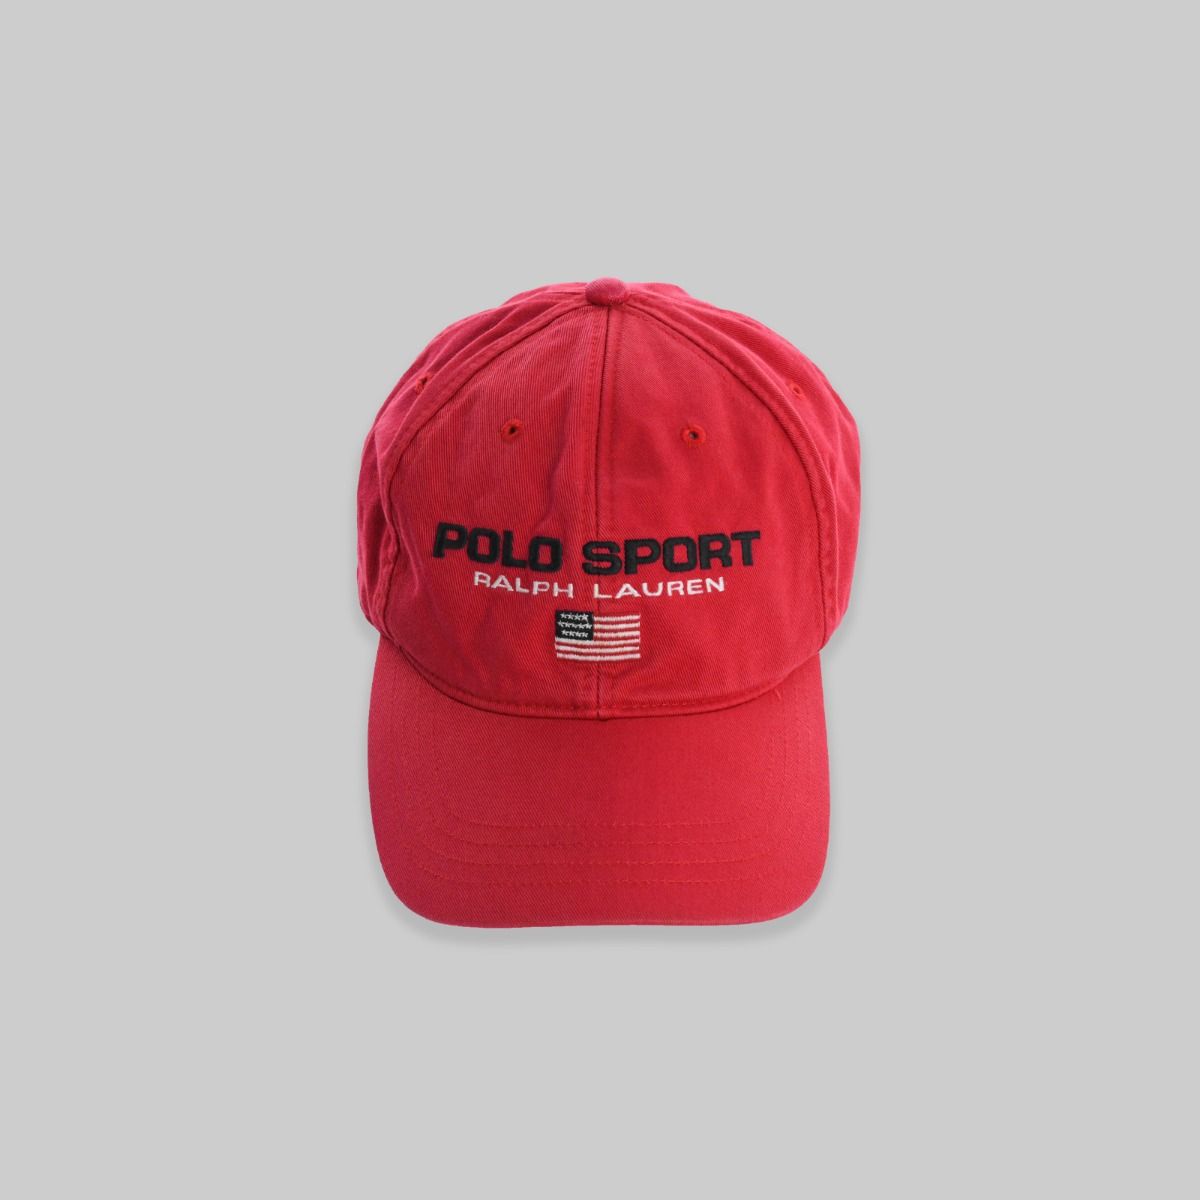 Ralph Lauren Polo Sport Hat